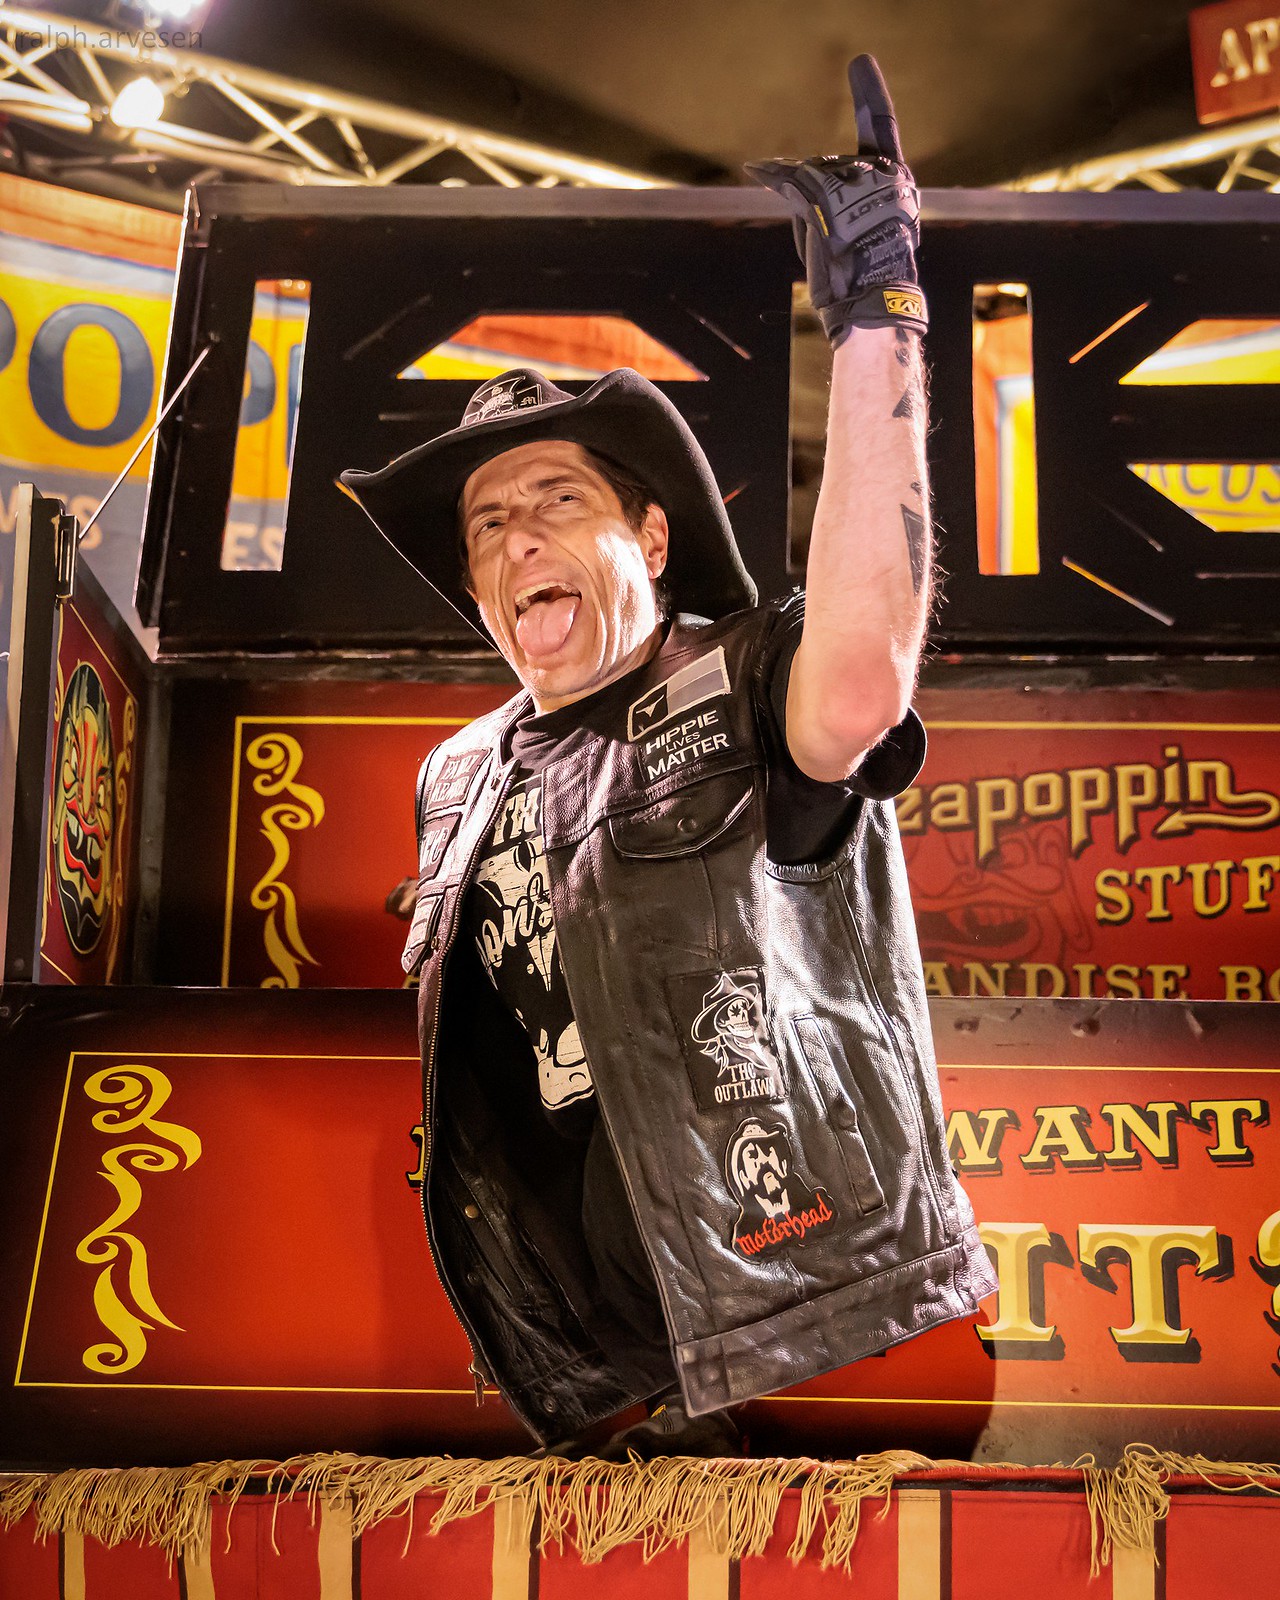 Hellzapoppin Circus Sideshow Review | Texas Review | Ralph Arvesen